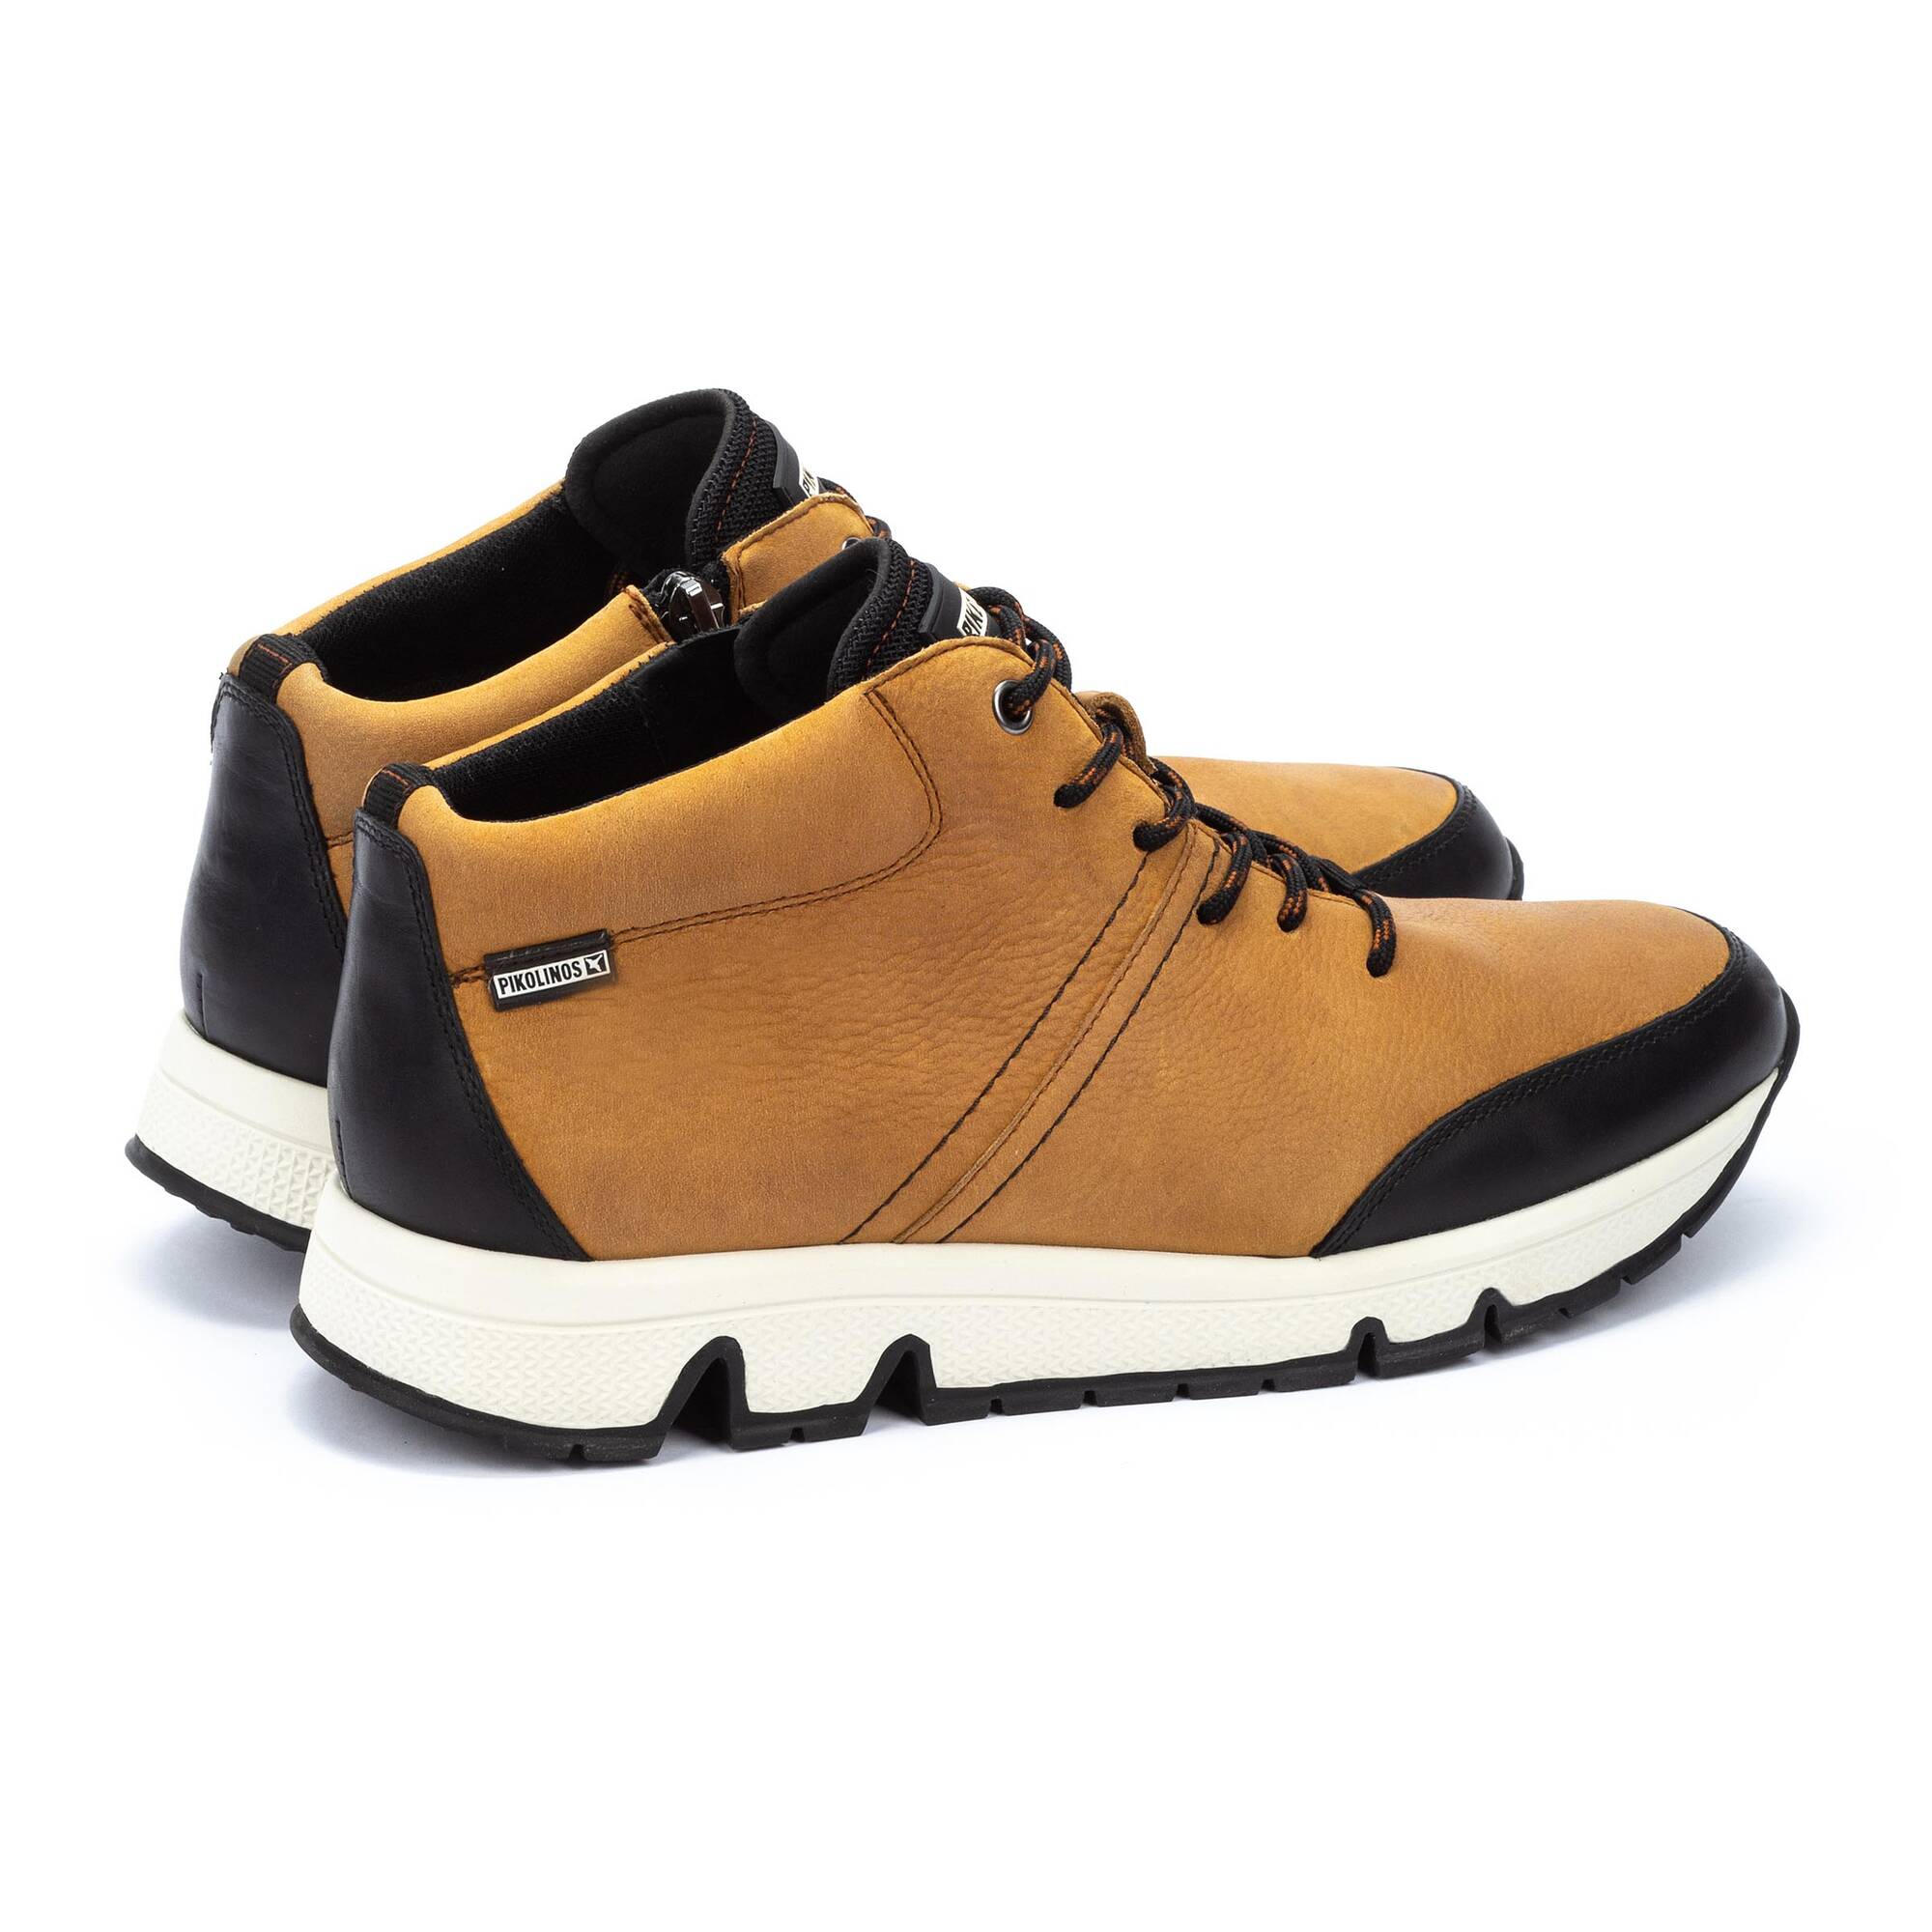 'Ferrol' men's sneaker boot - Camel brown - Chaplinshoes'Ferrol' men's sneaker boot - Camel brownPikolinos